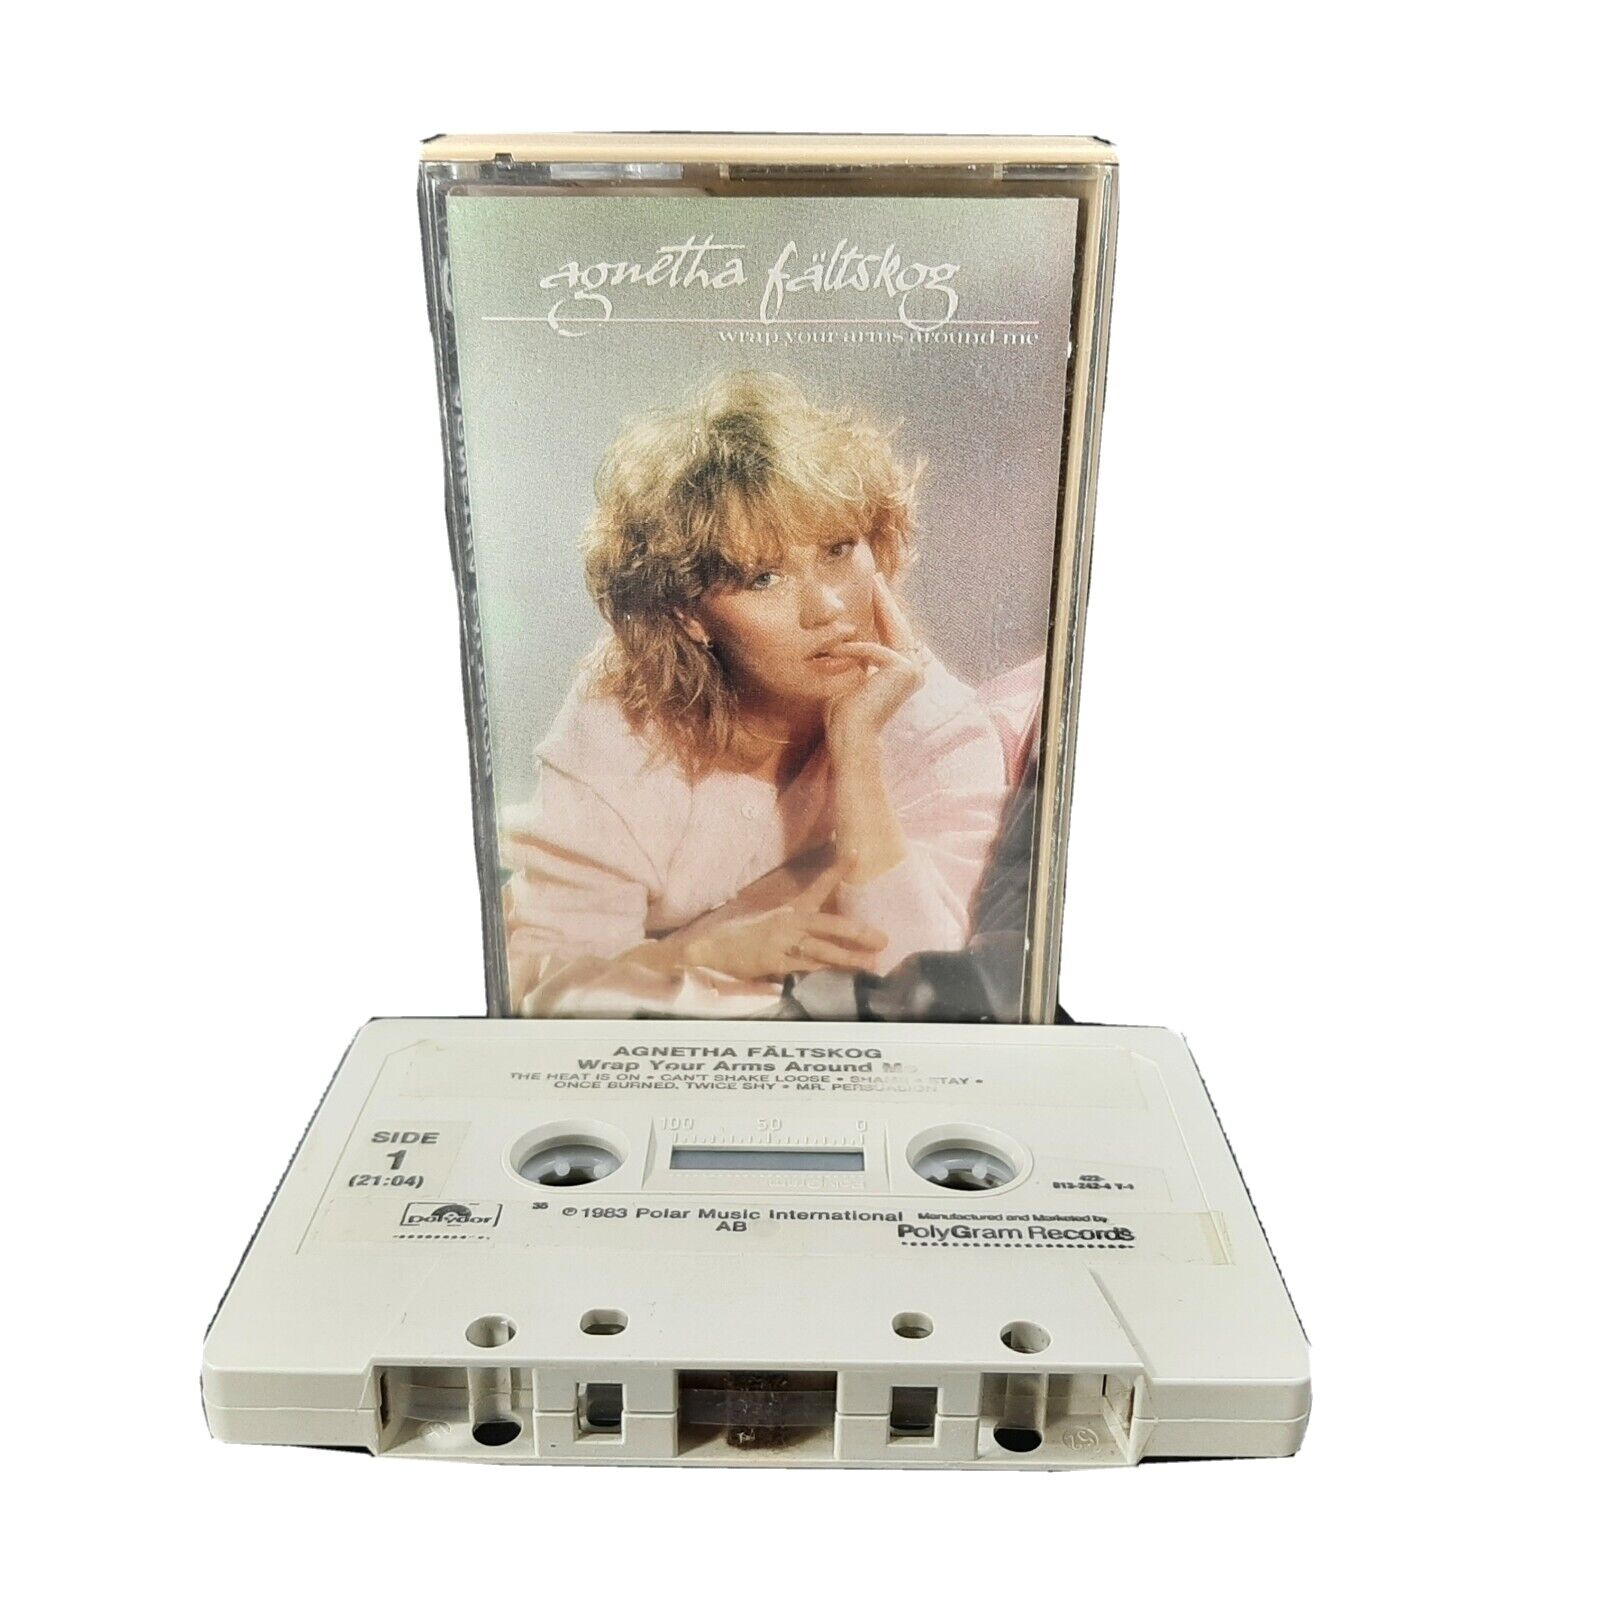 Agnetha Fältskog ‎Wrap Your Arms Around Me Cassettte 1983 Europop 813 242-4 Y-1